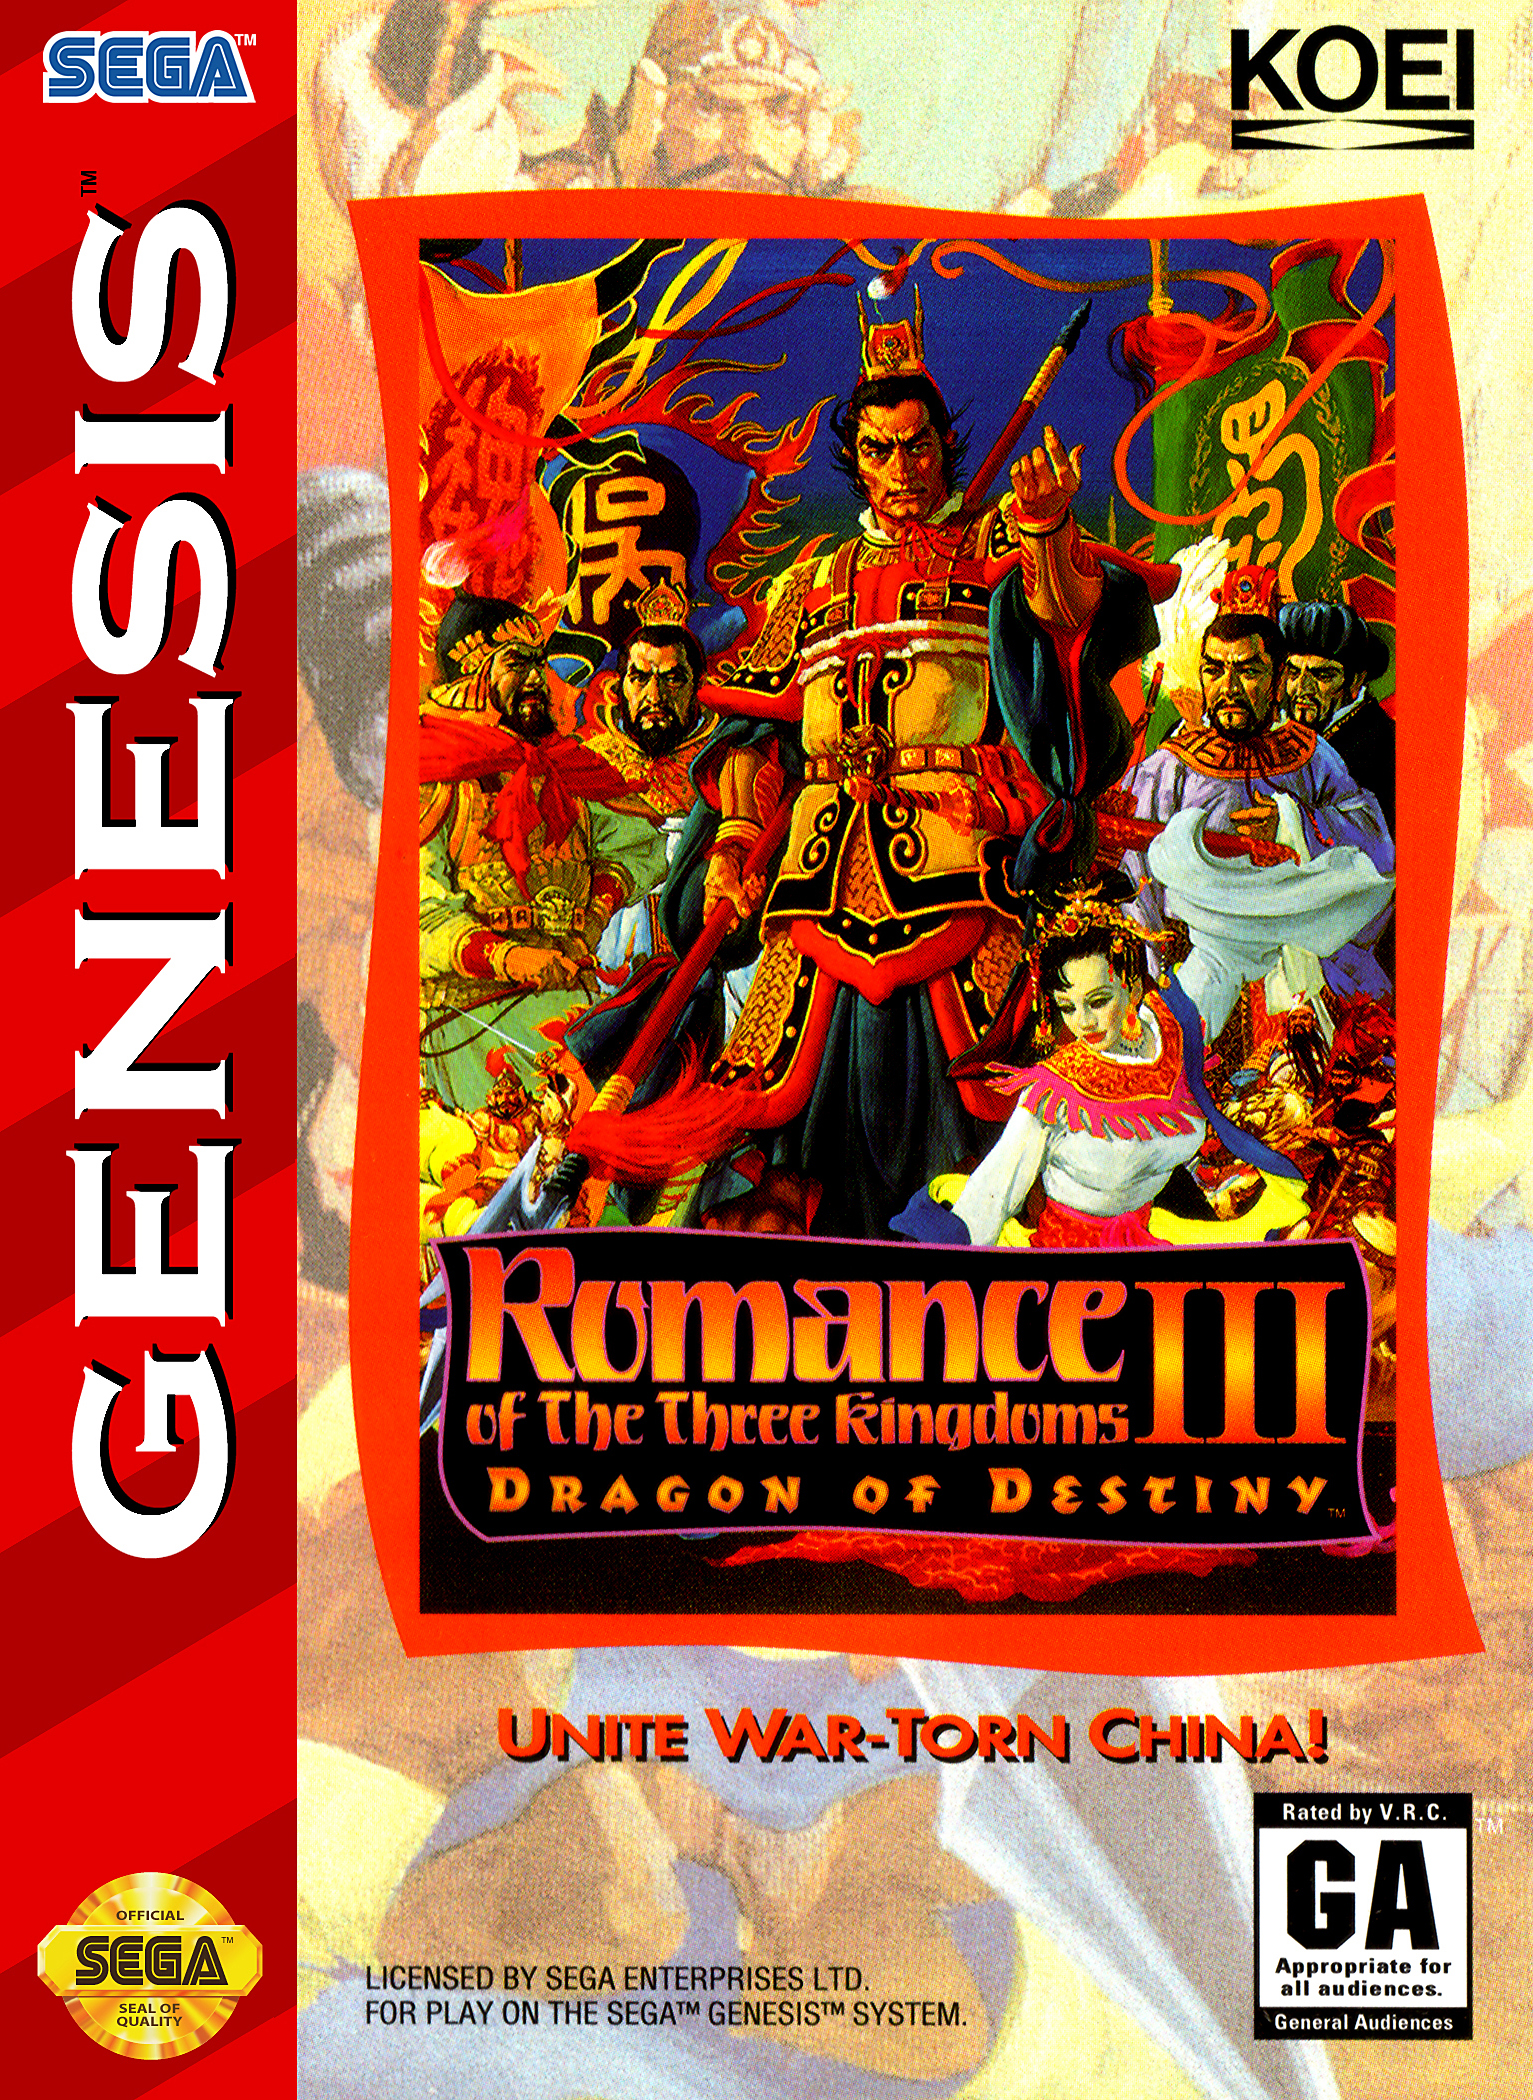 Romance of the Three Kingdoms III: Dragon of Destiny Picture